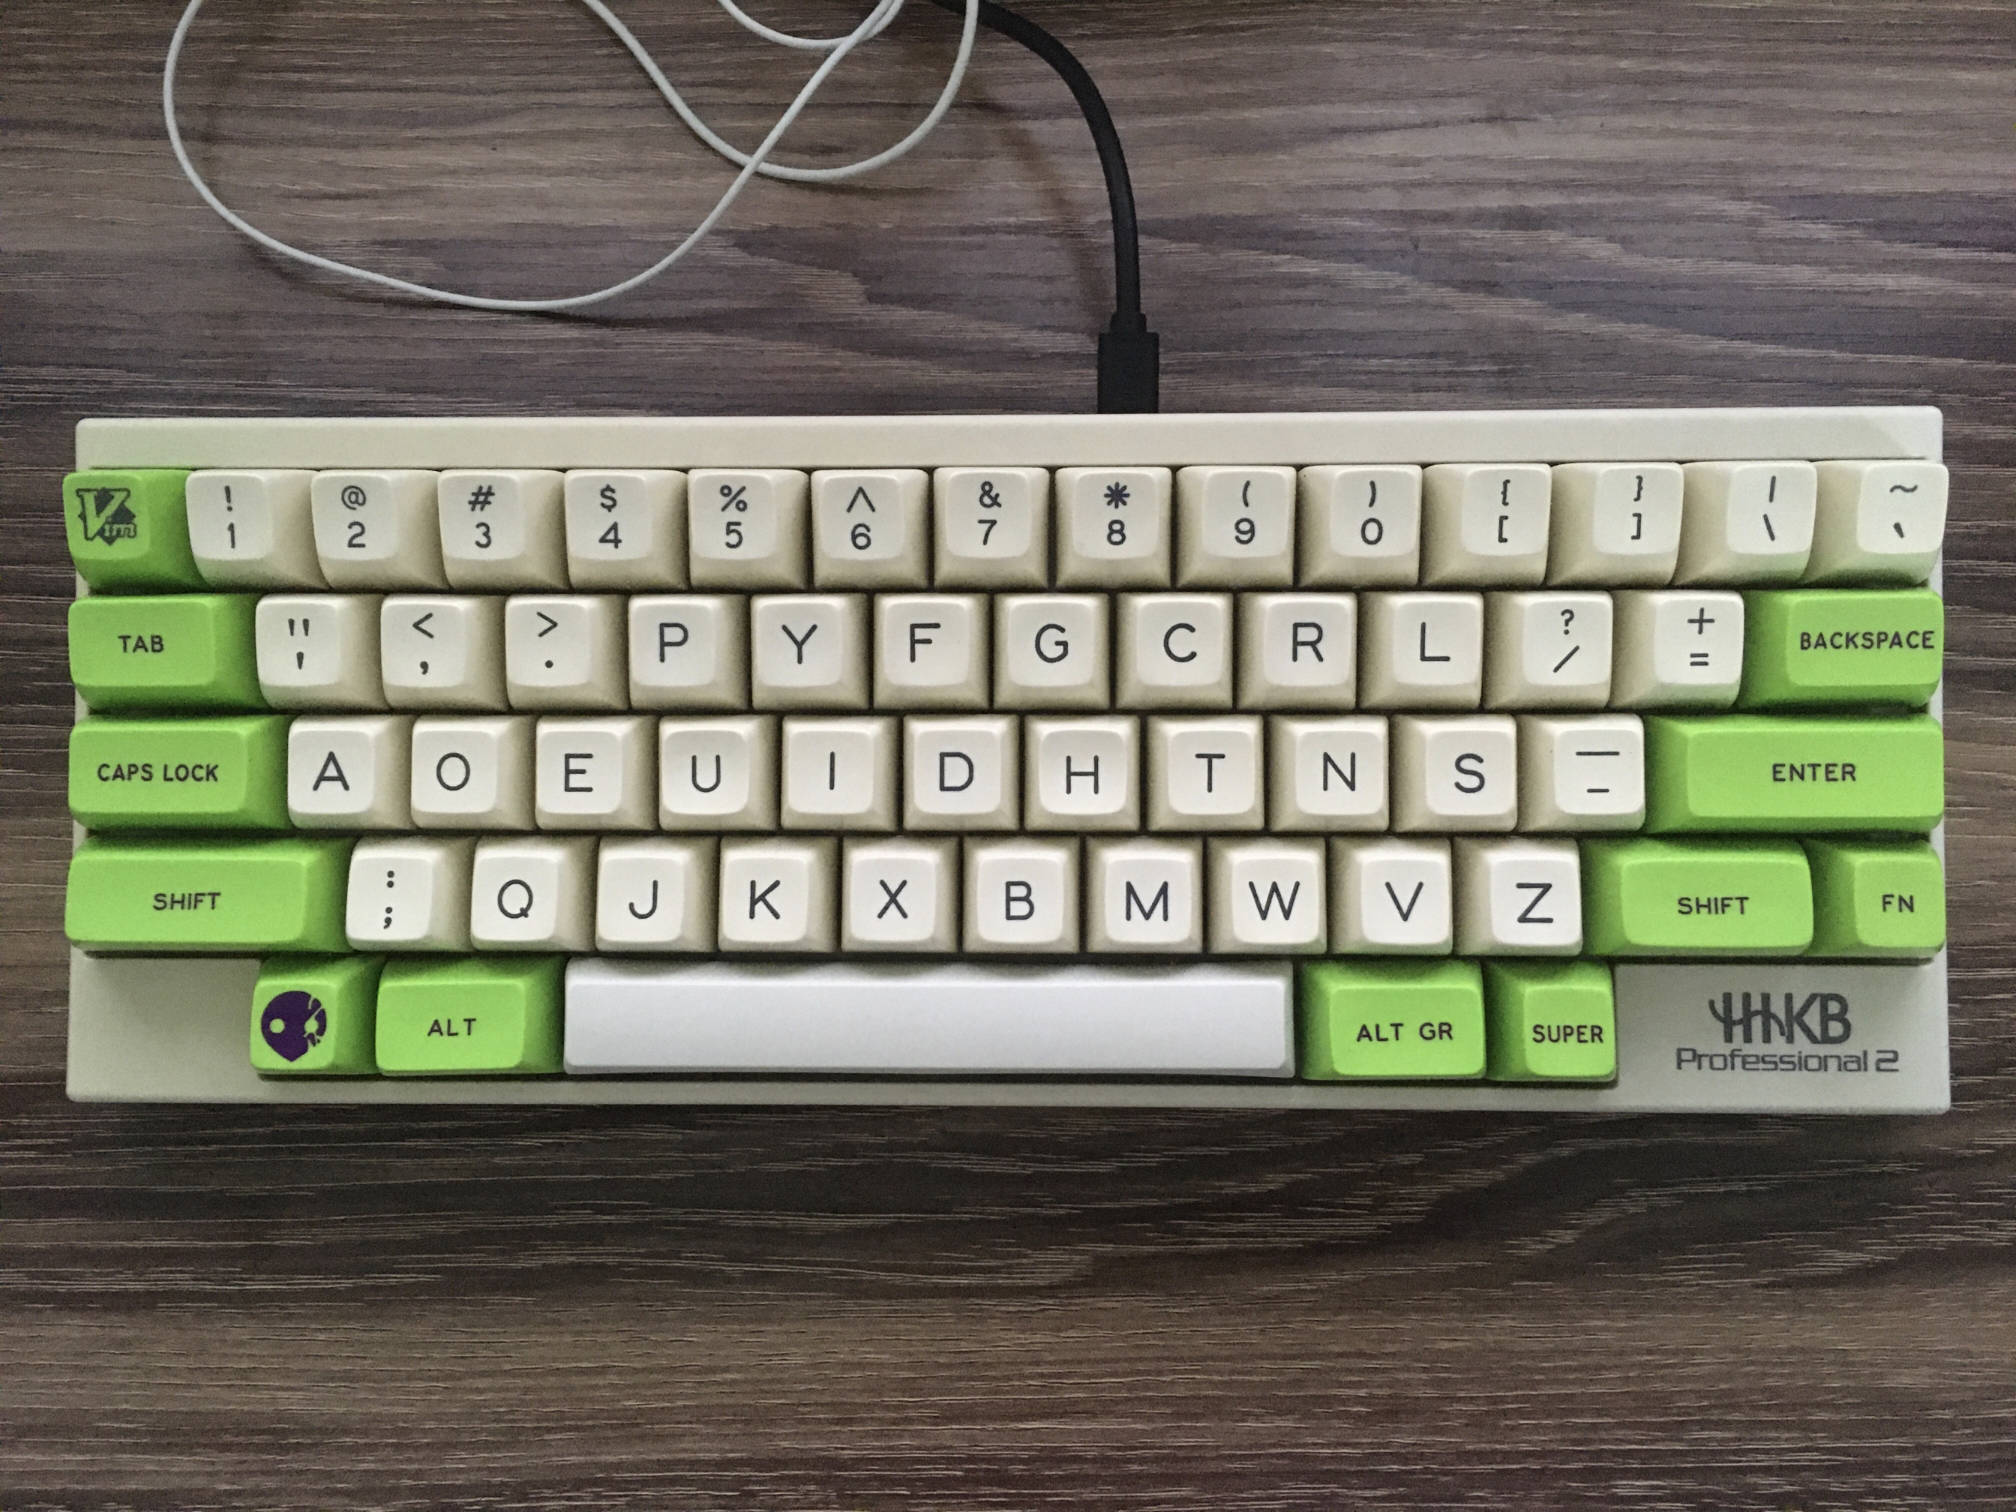 Post your Topre boards - OEM keyboards - KeebTalk